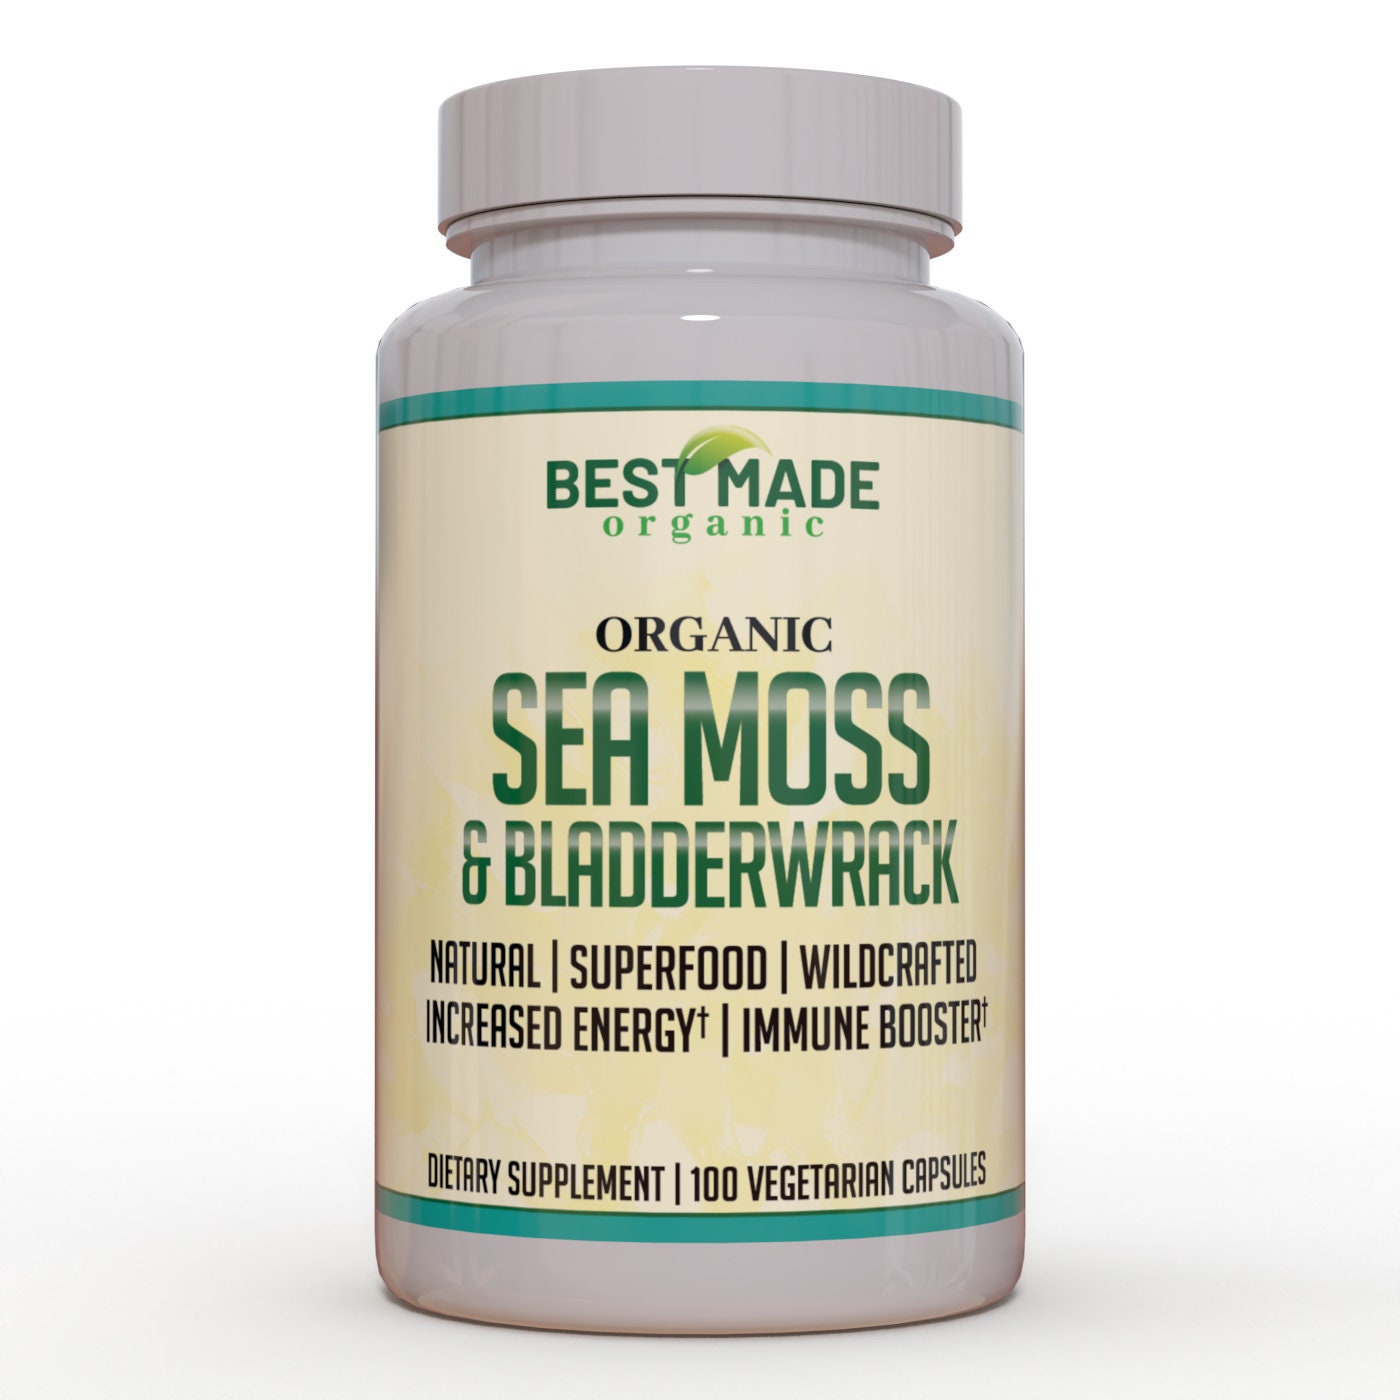 Organic Sea moss Gel 16oz. for women – BestMadeOrganic